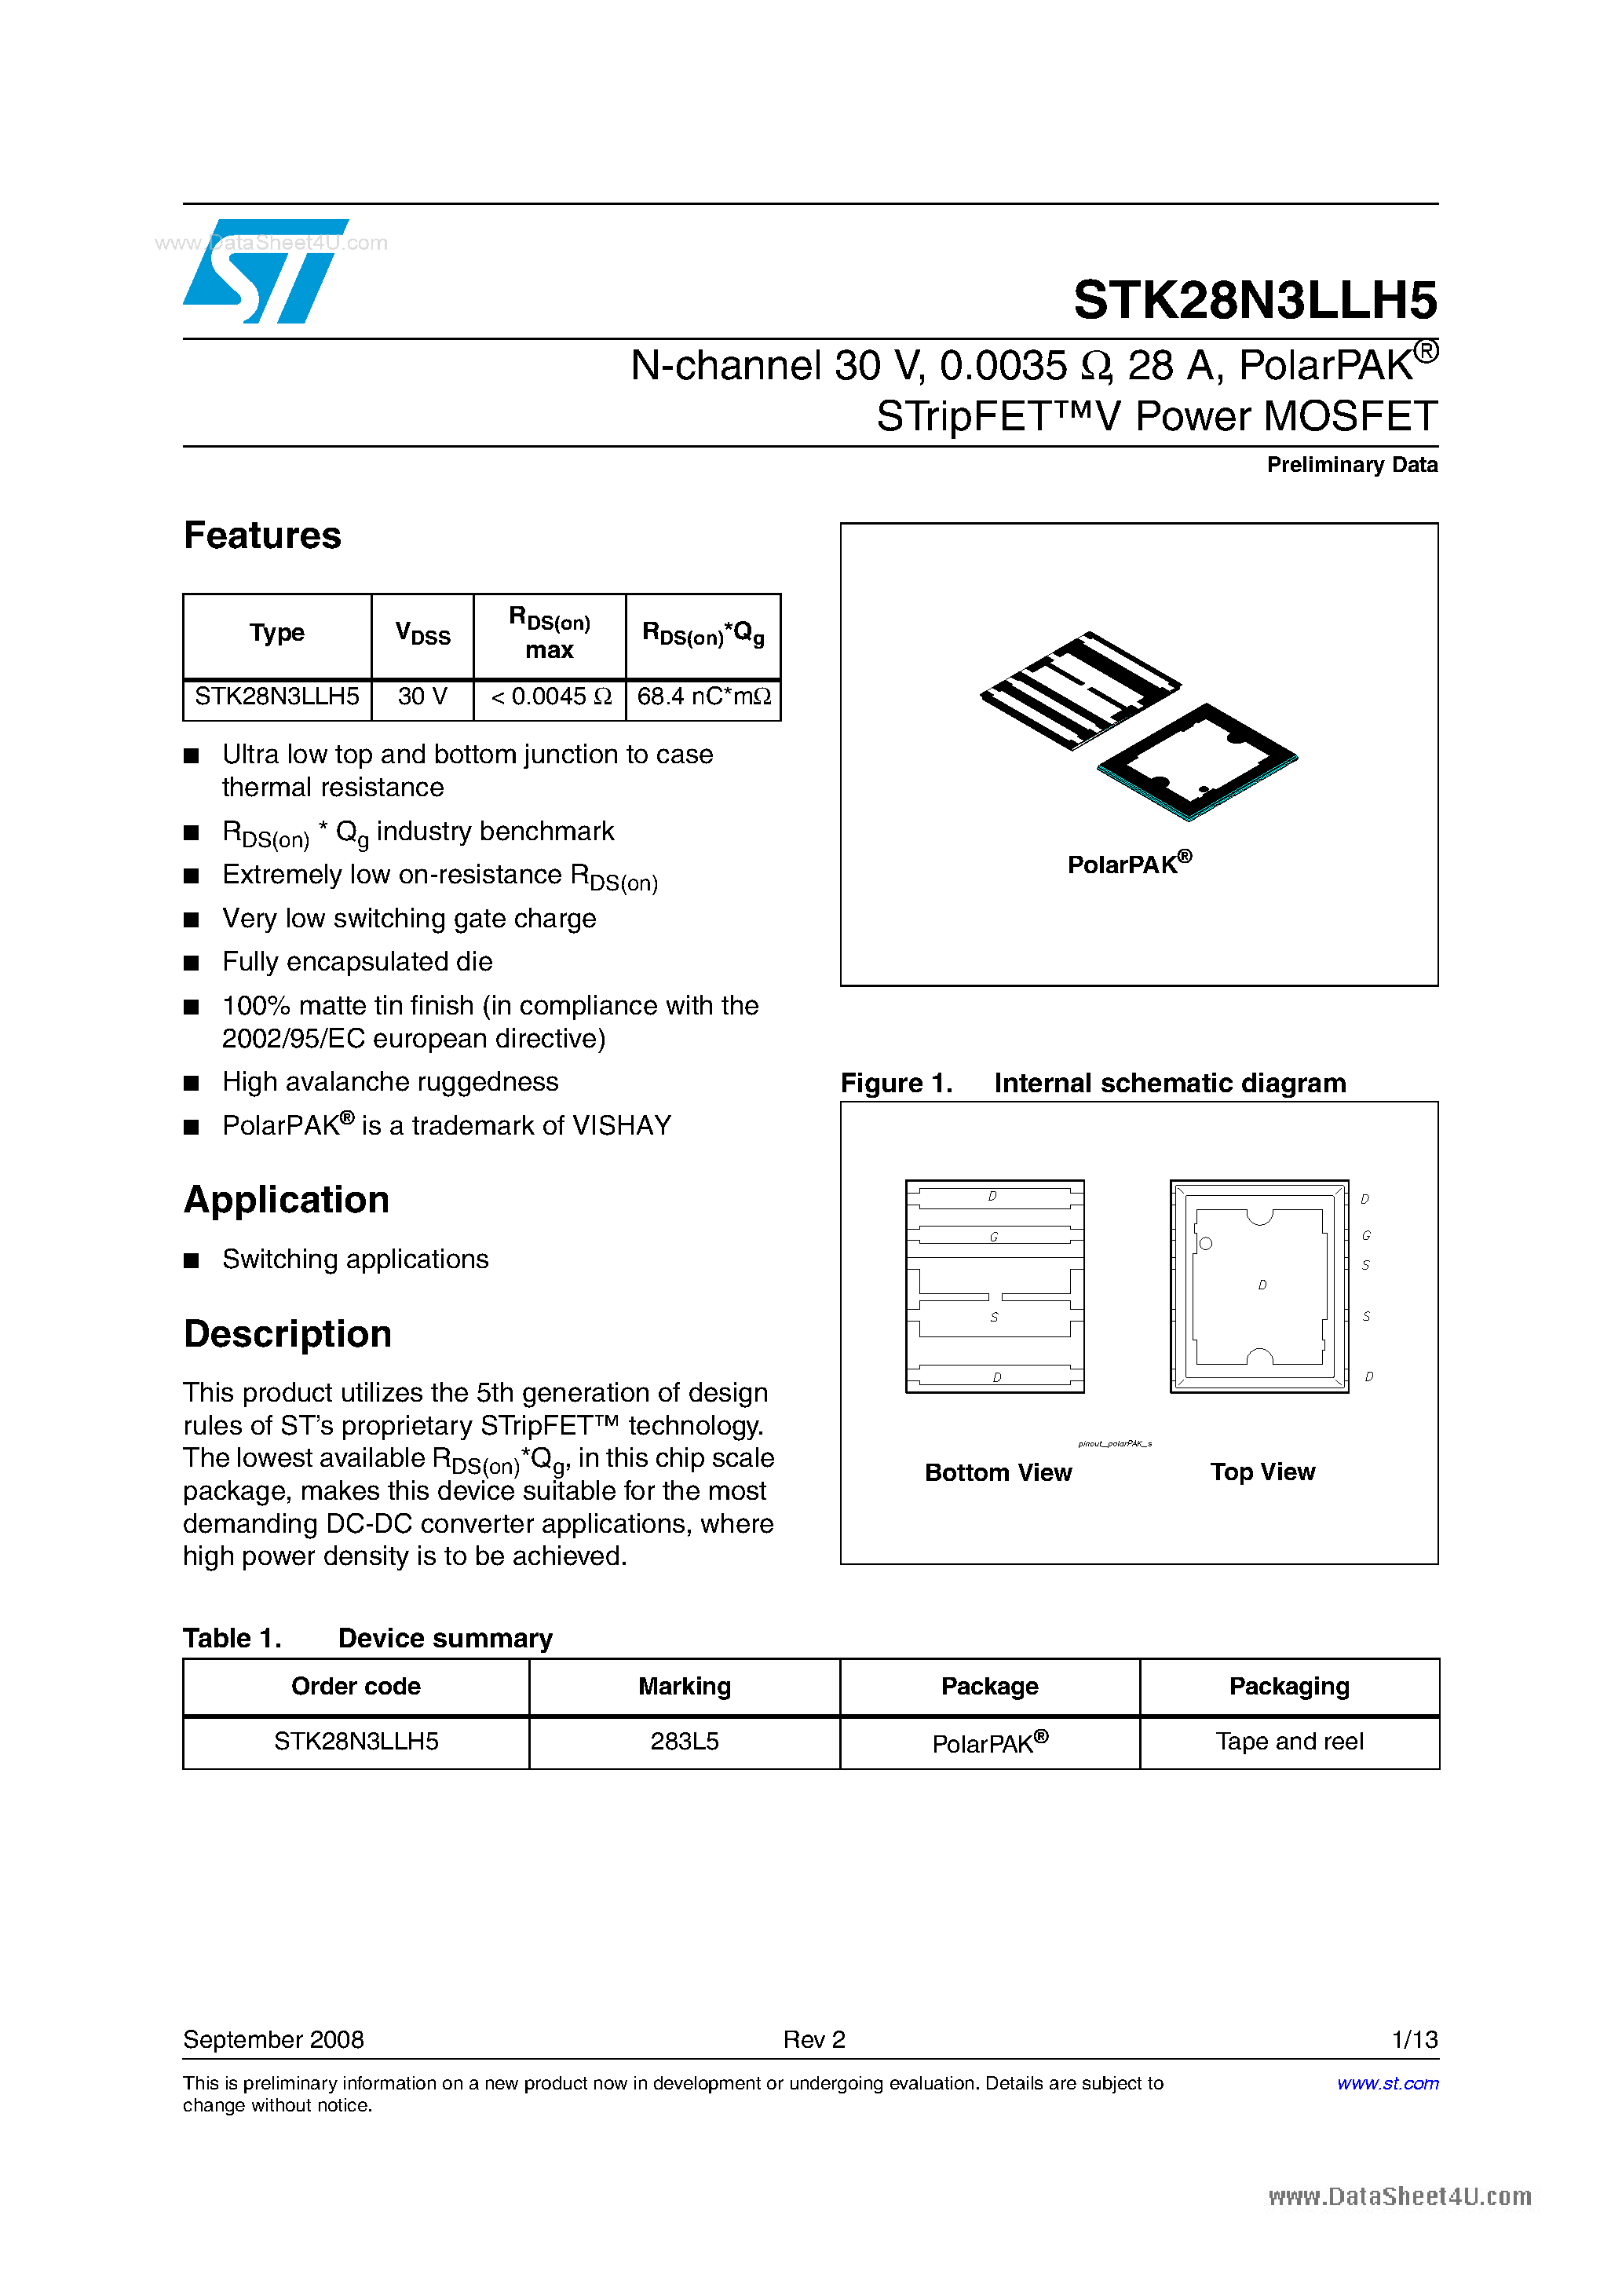 Datasheet STK28N3LLH5 - N-channel Power MOSFET page 1